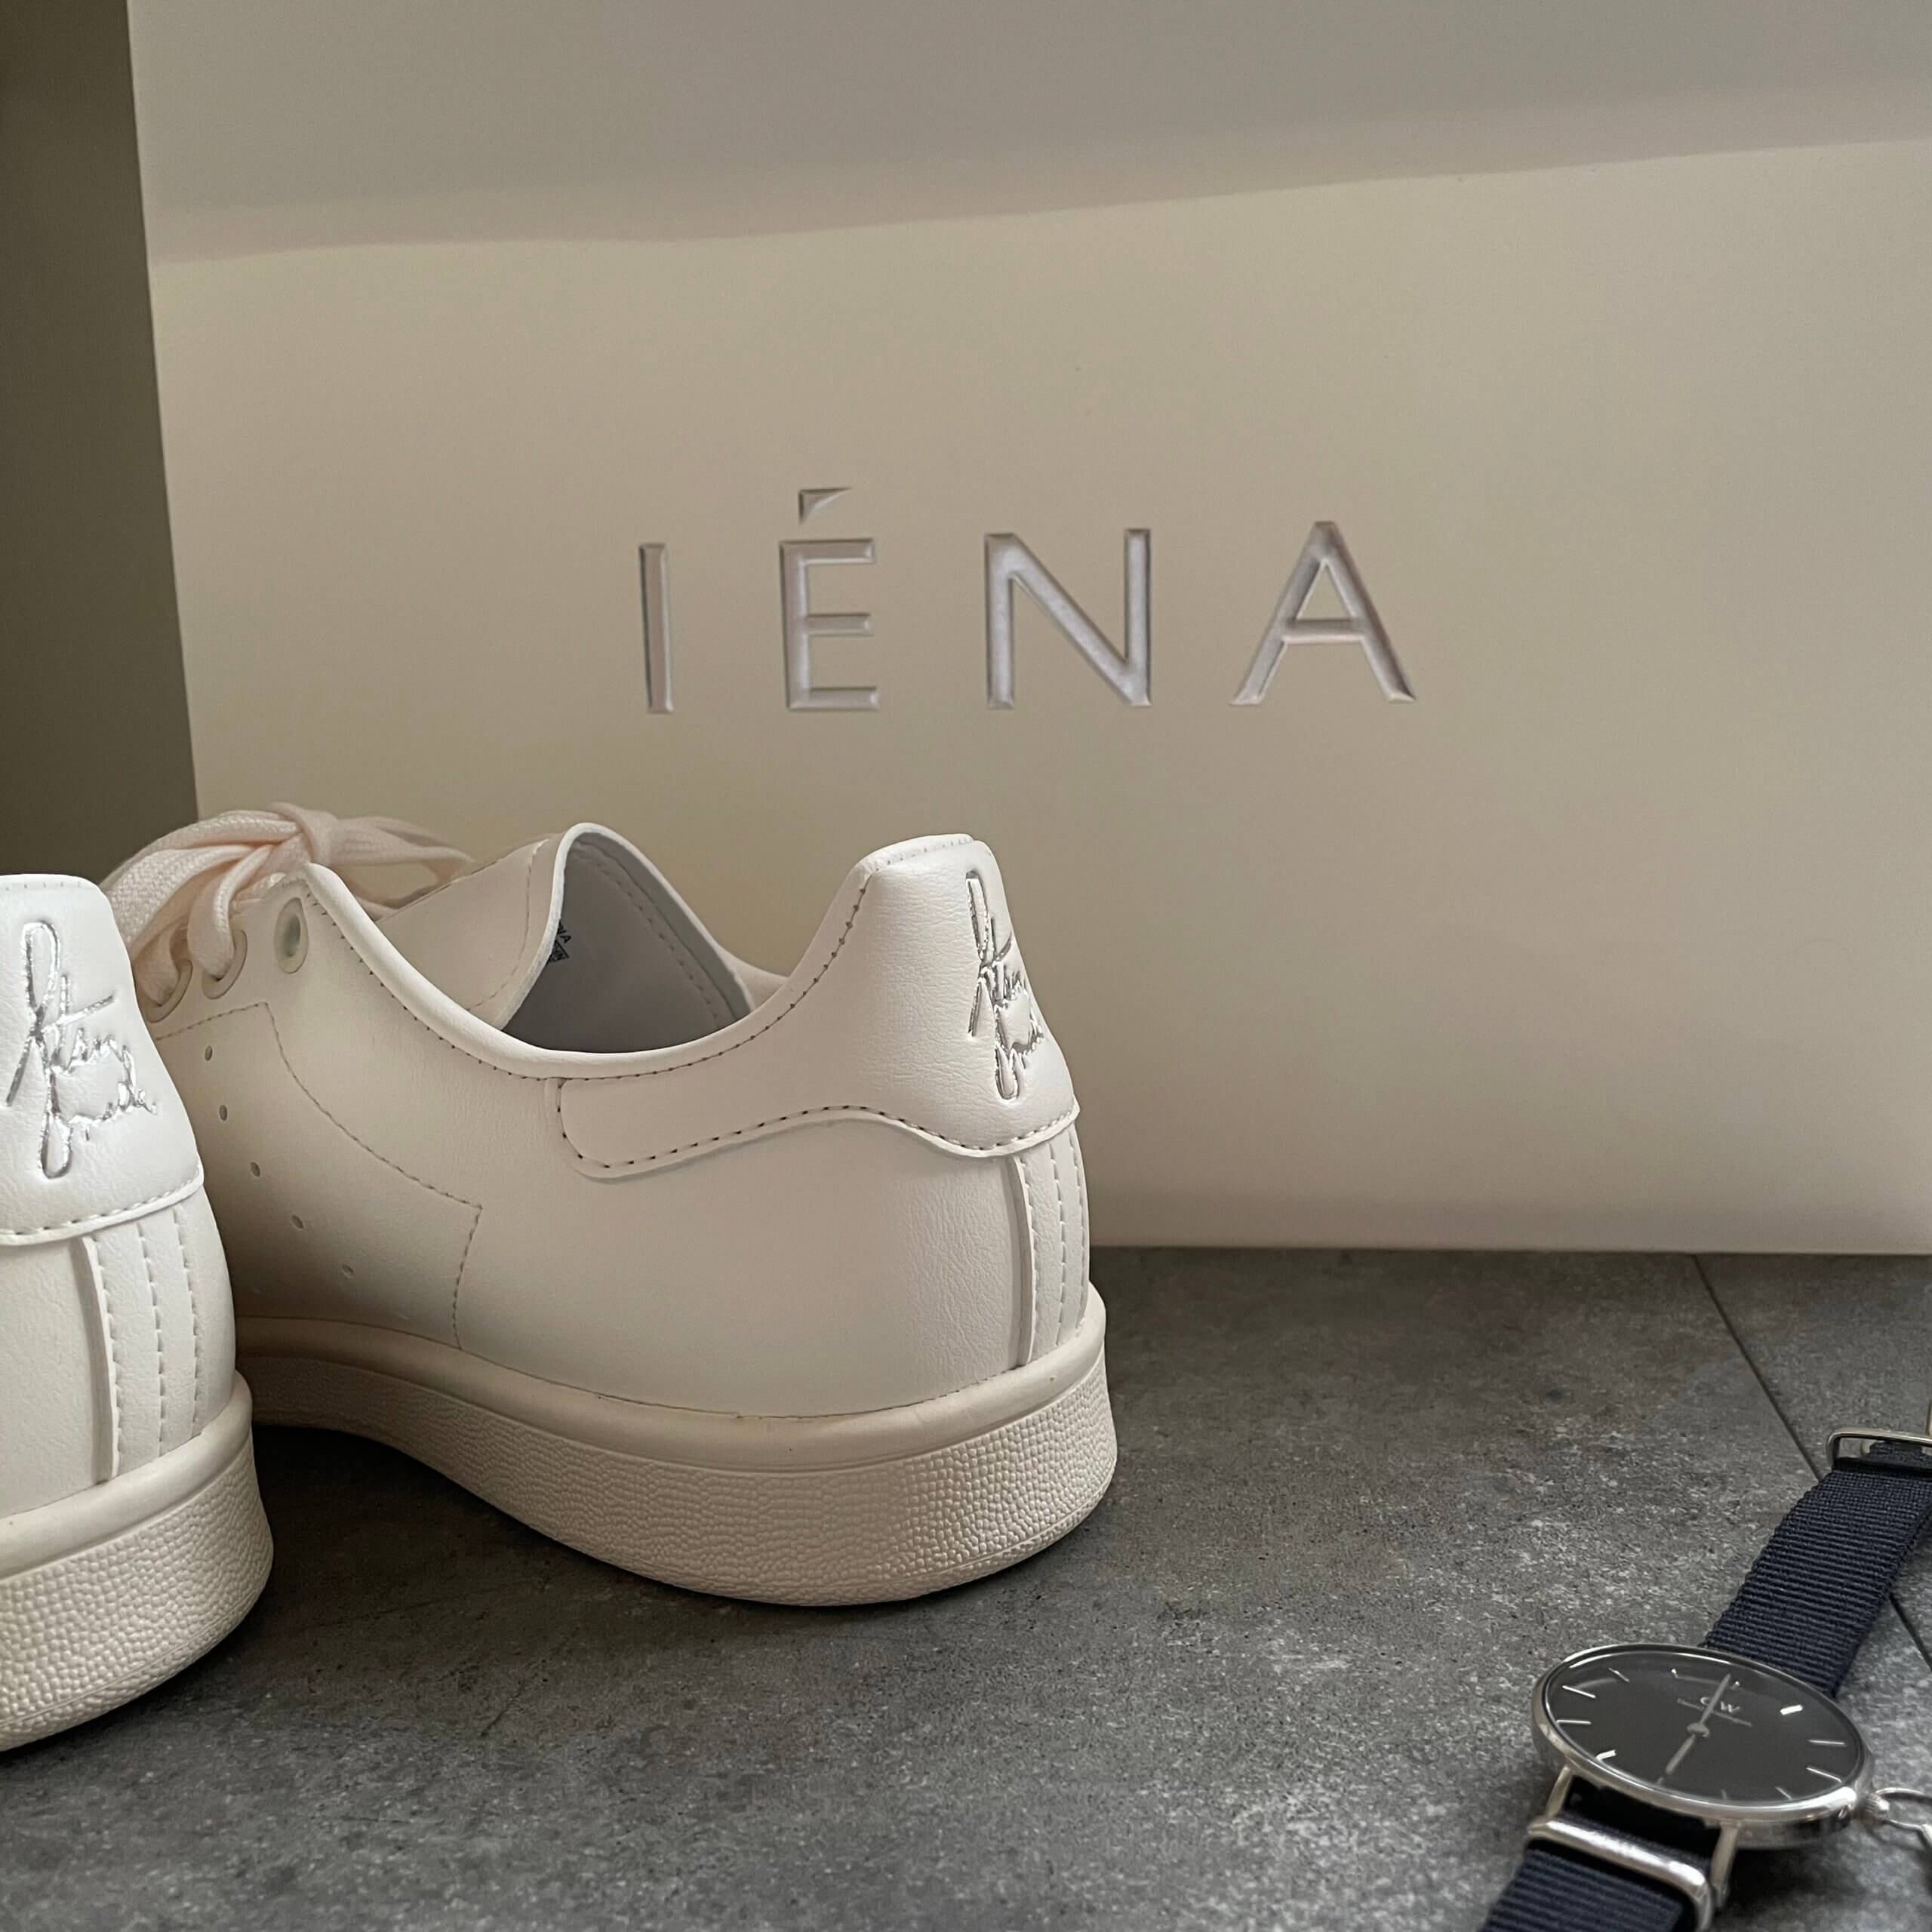 IENA adidas 別注 STAN SMITH スタンスミス - スニーカー